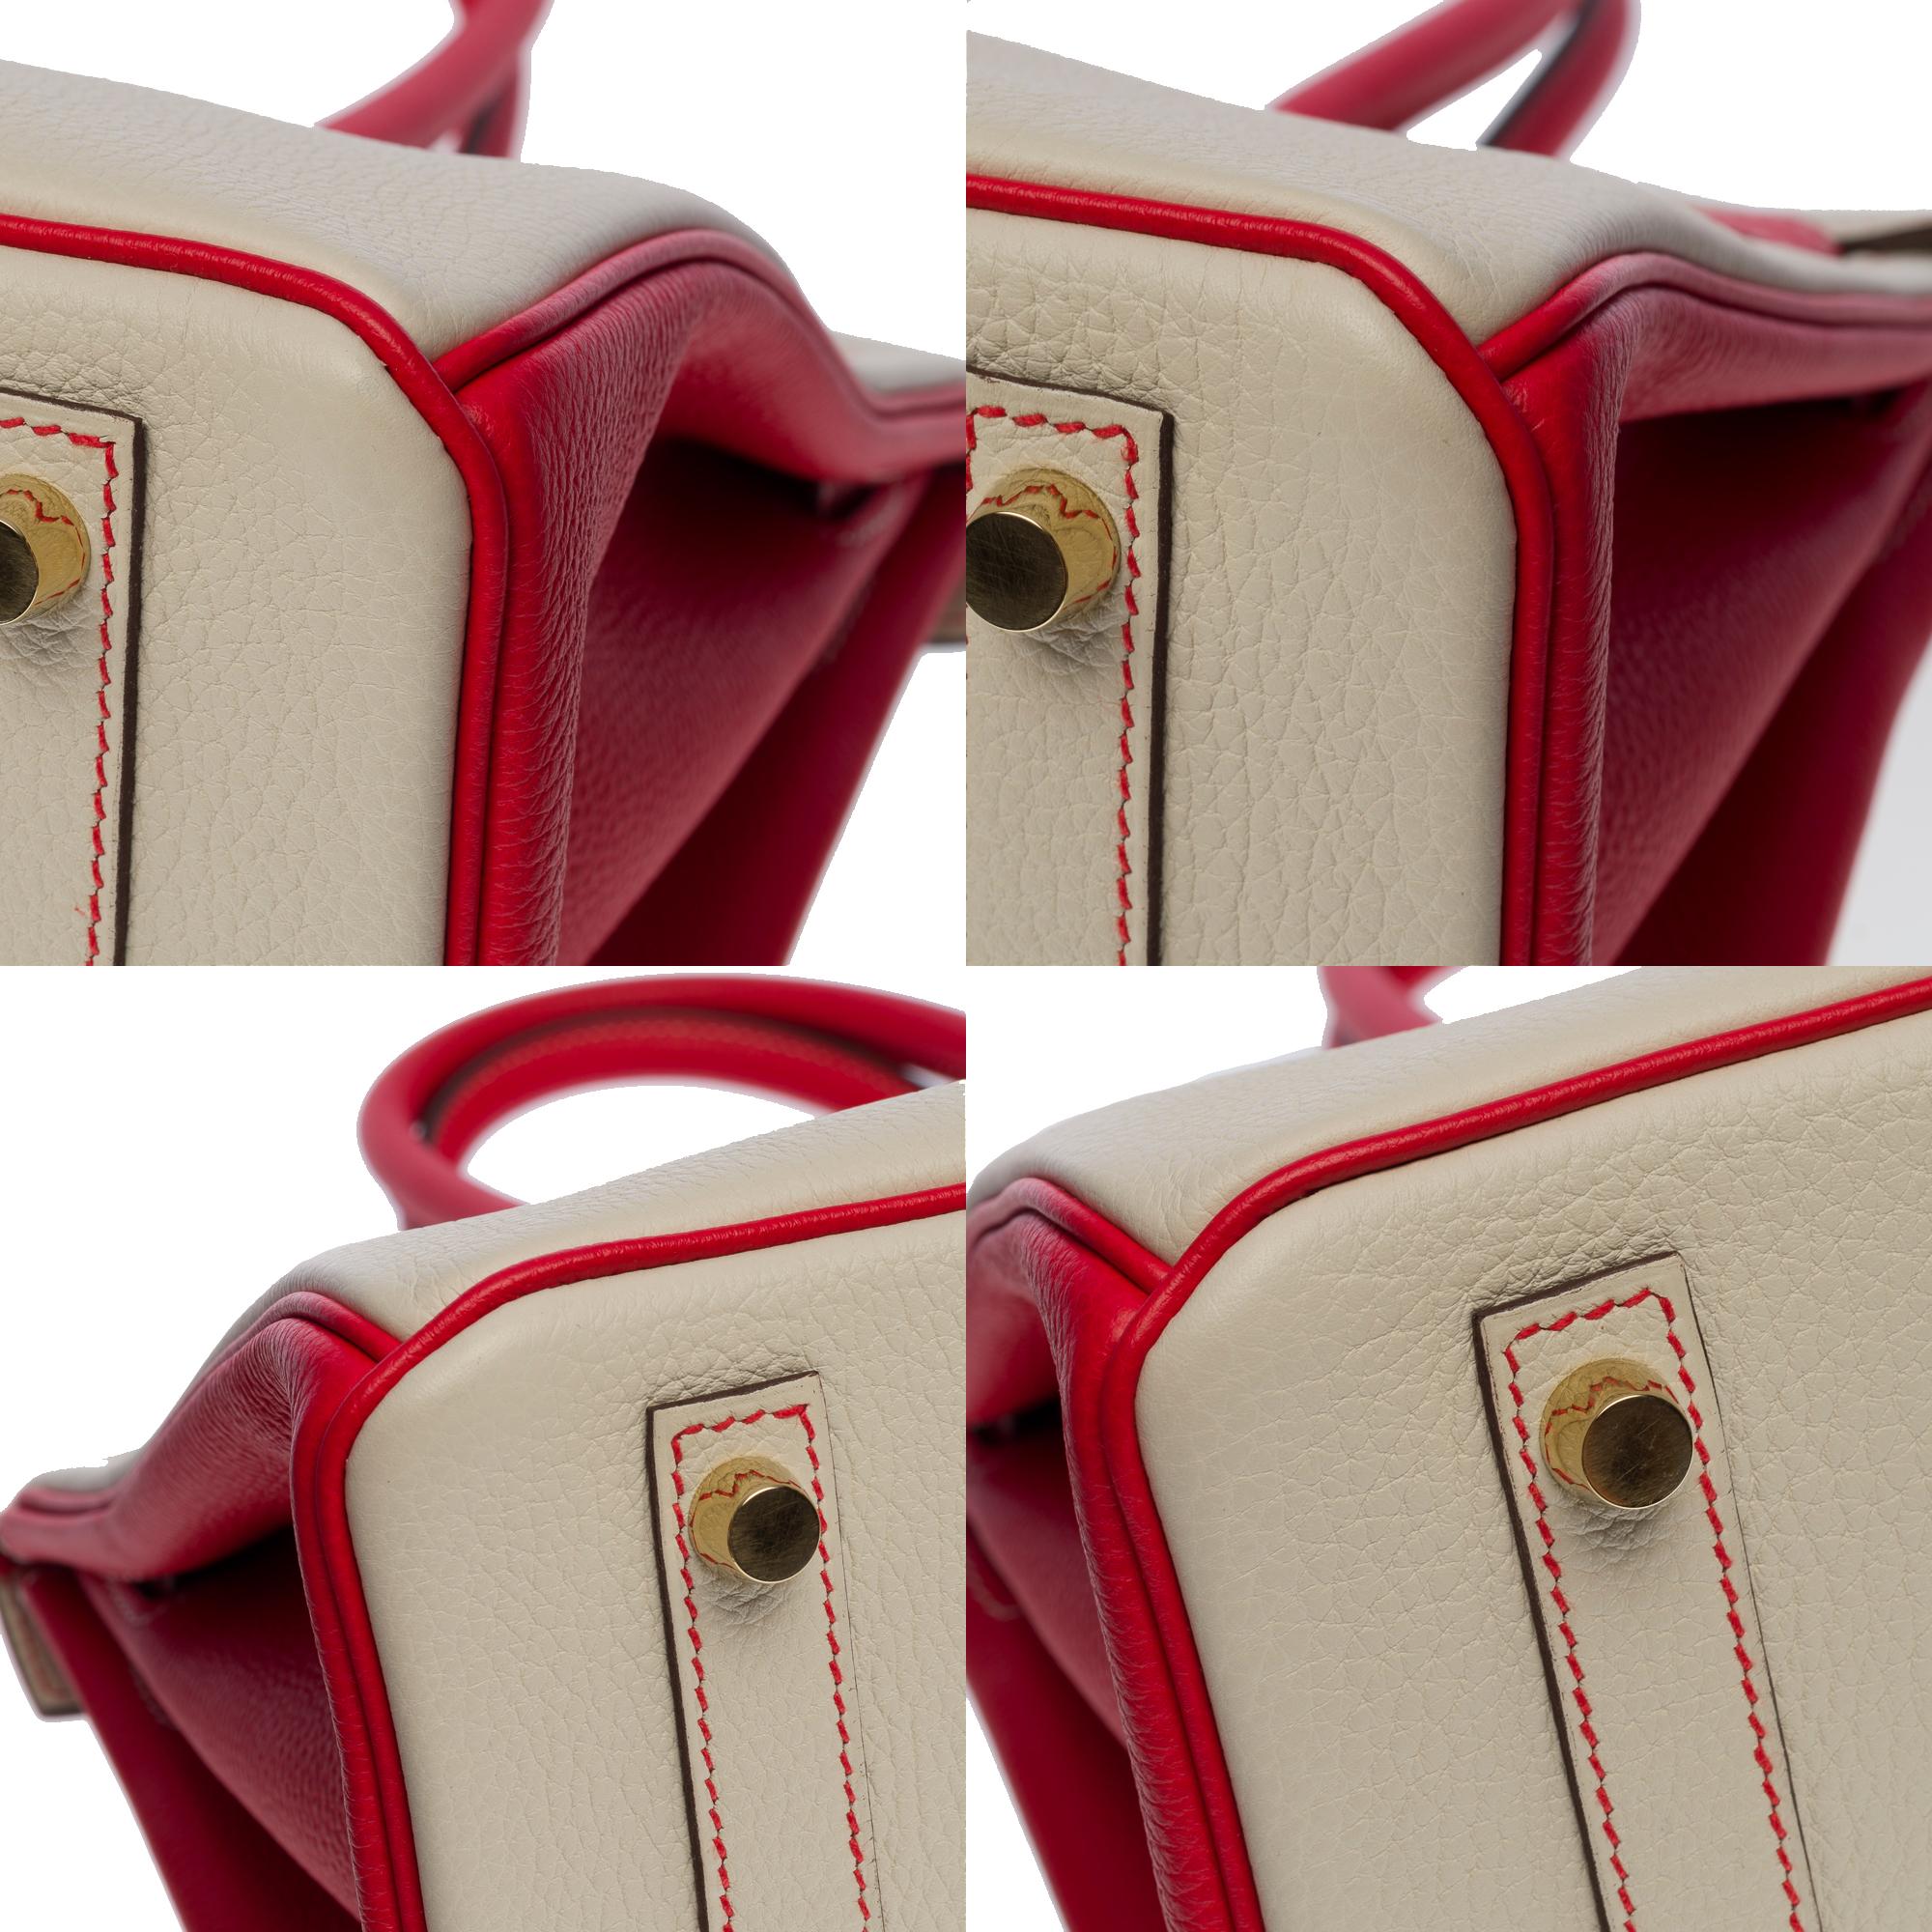  Hermès Birkin 30 HSS Special Order handbag in Craie/Red Togo leather, PHW 6